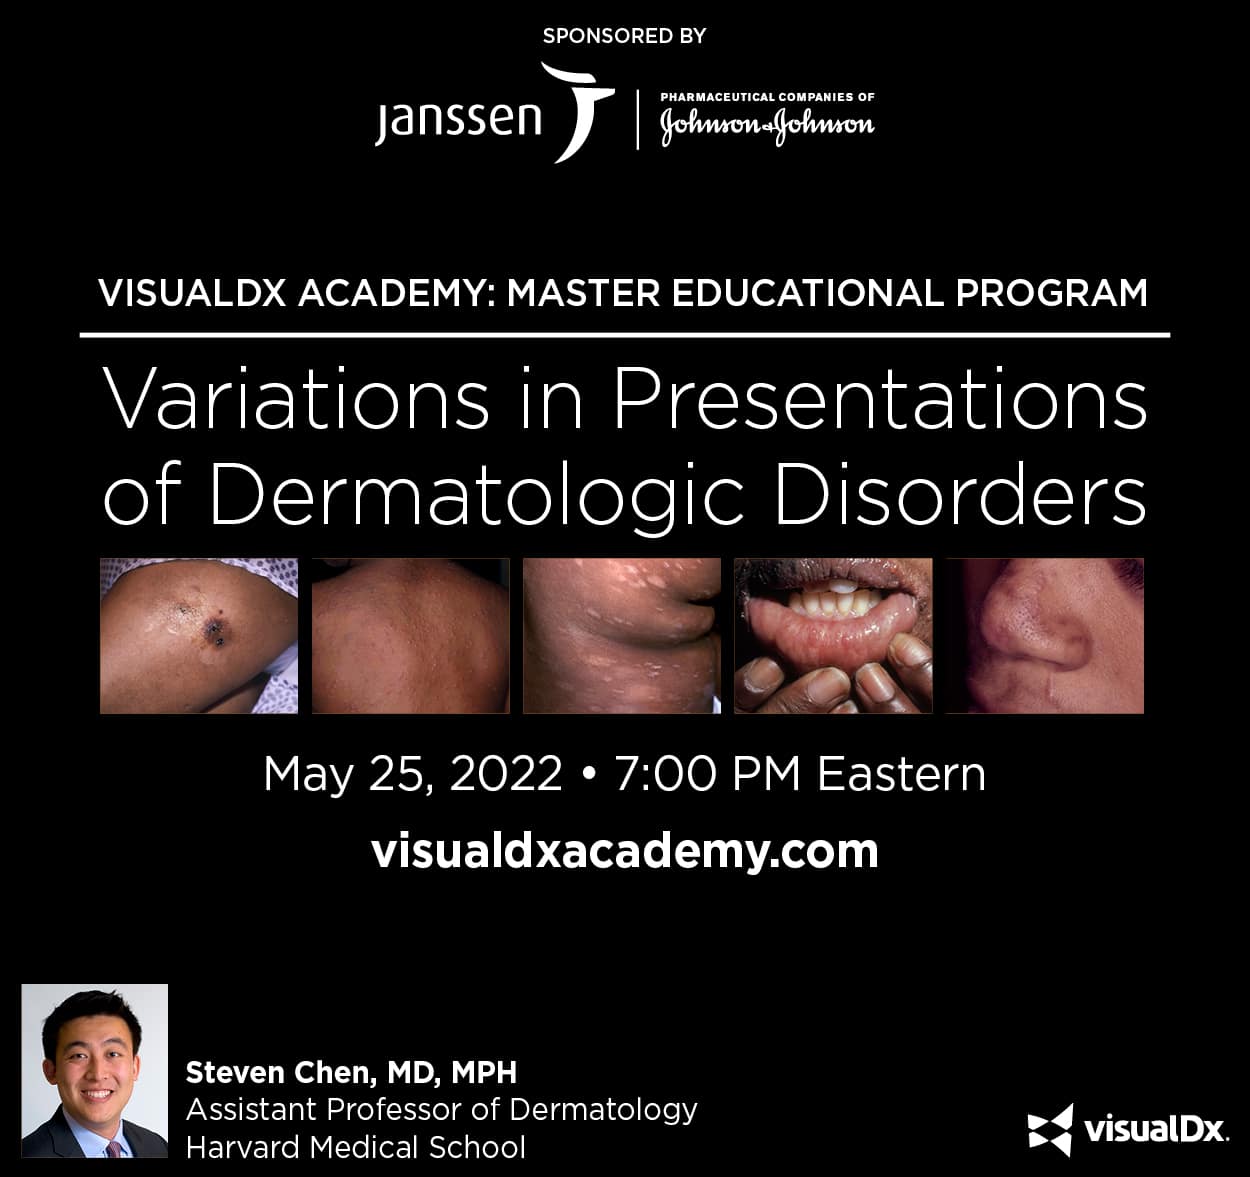 VisualDx Academy: Variations in Presentations of Dermatologic Disorders